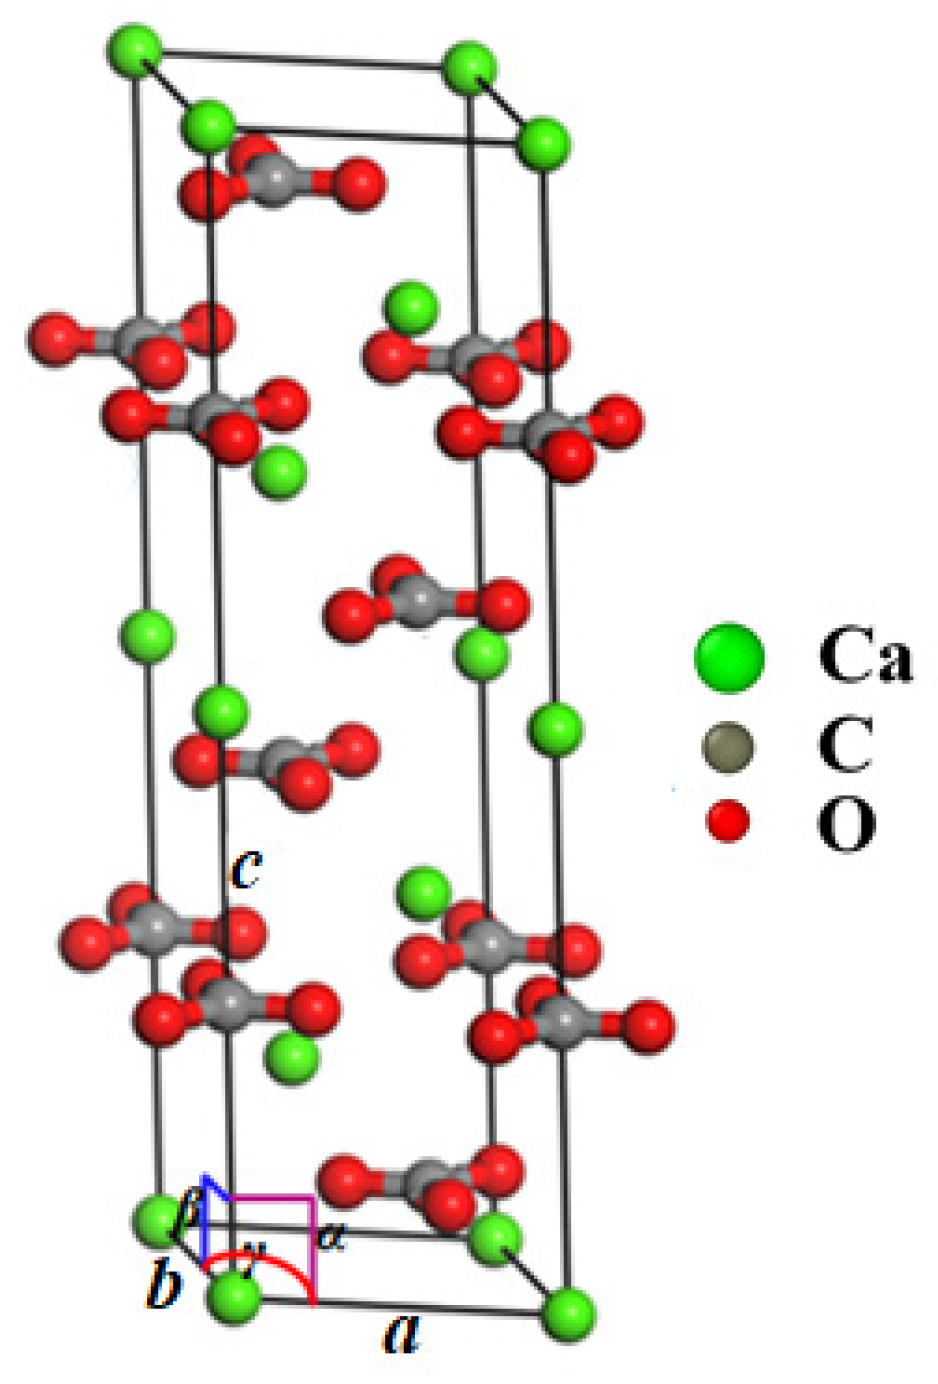 a Unit cell of calcium carbonate (calcite, CaCO3) showing partial